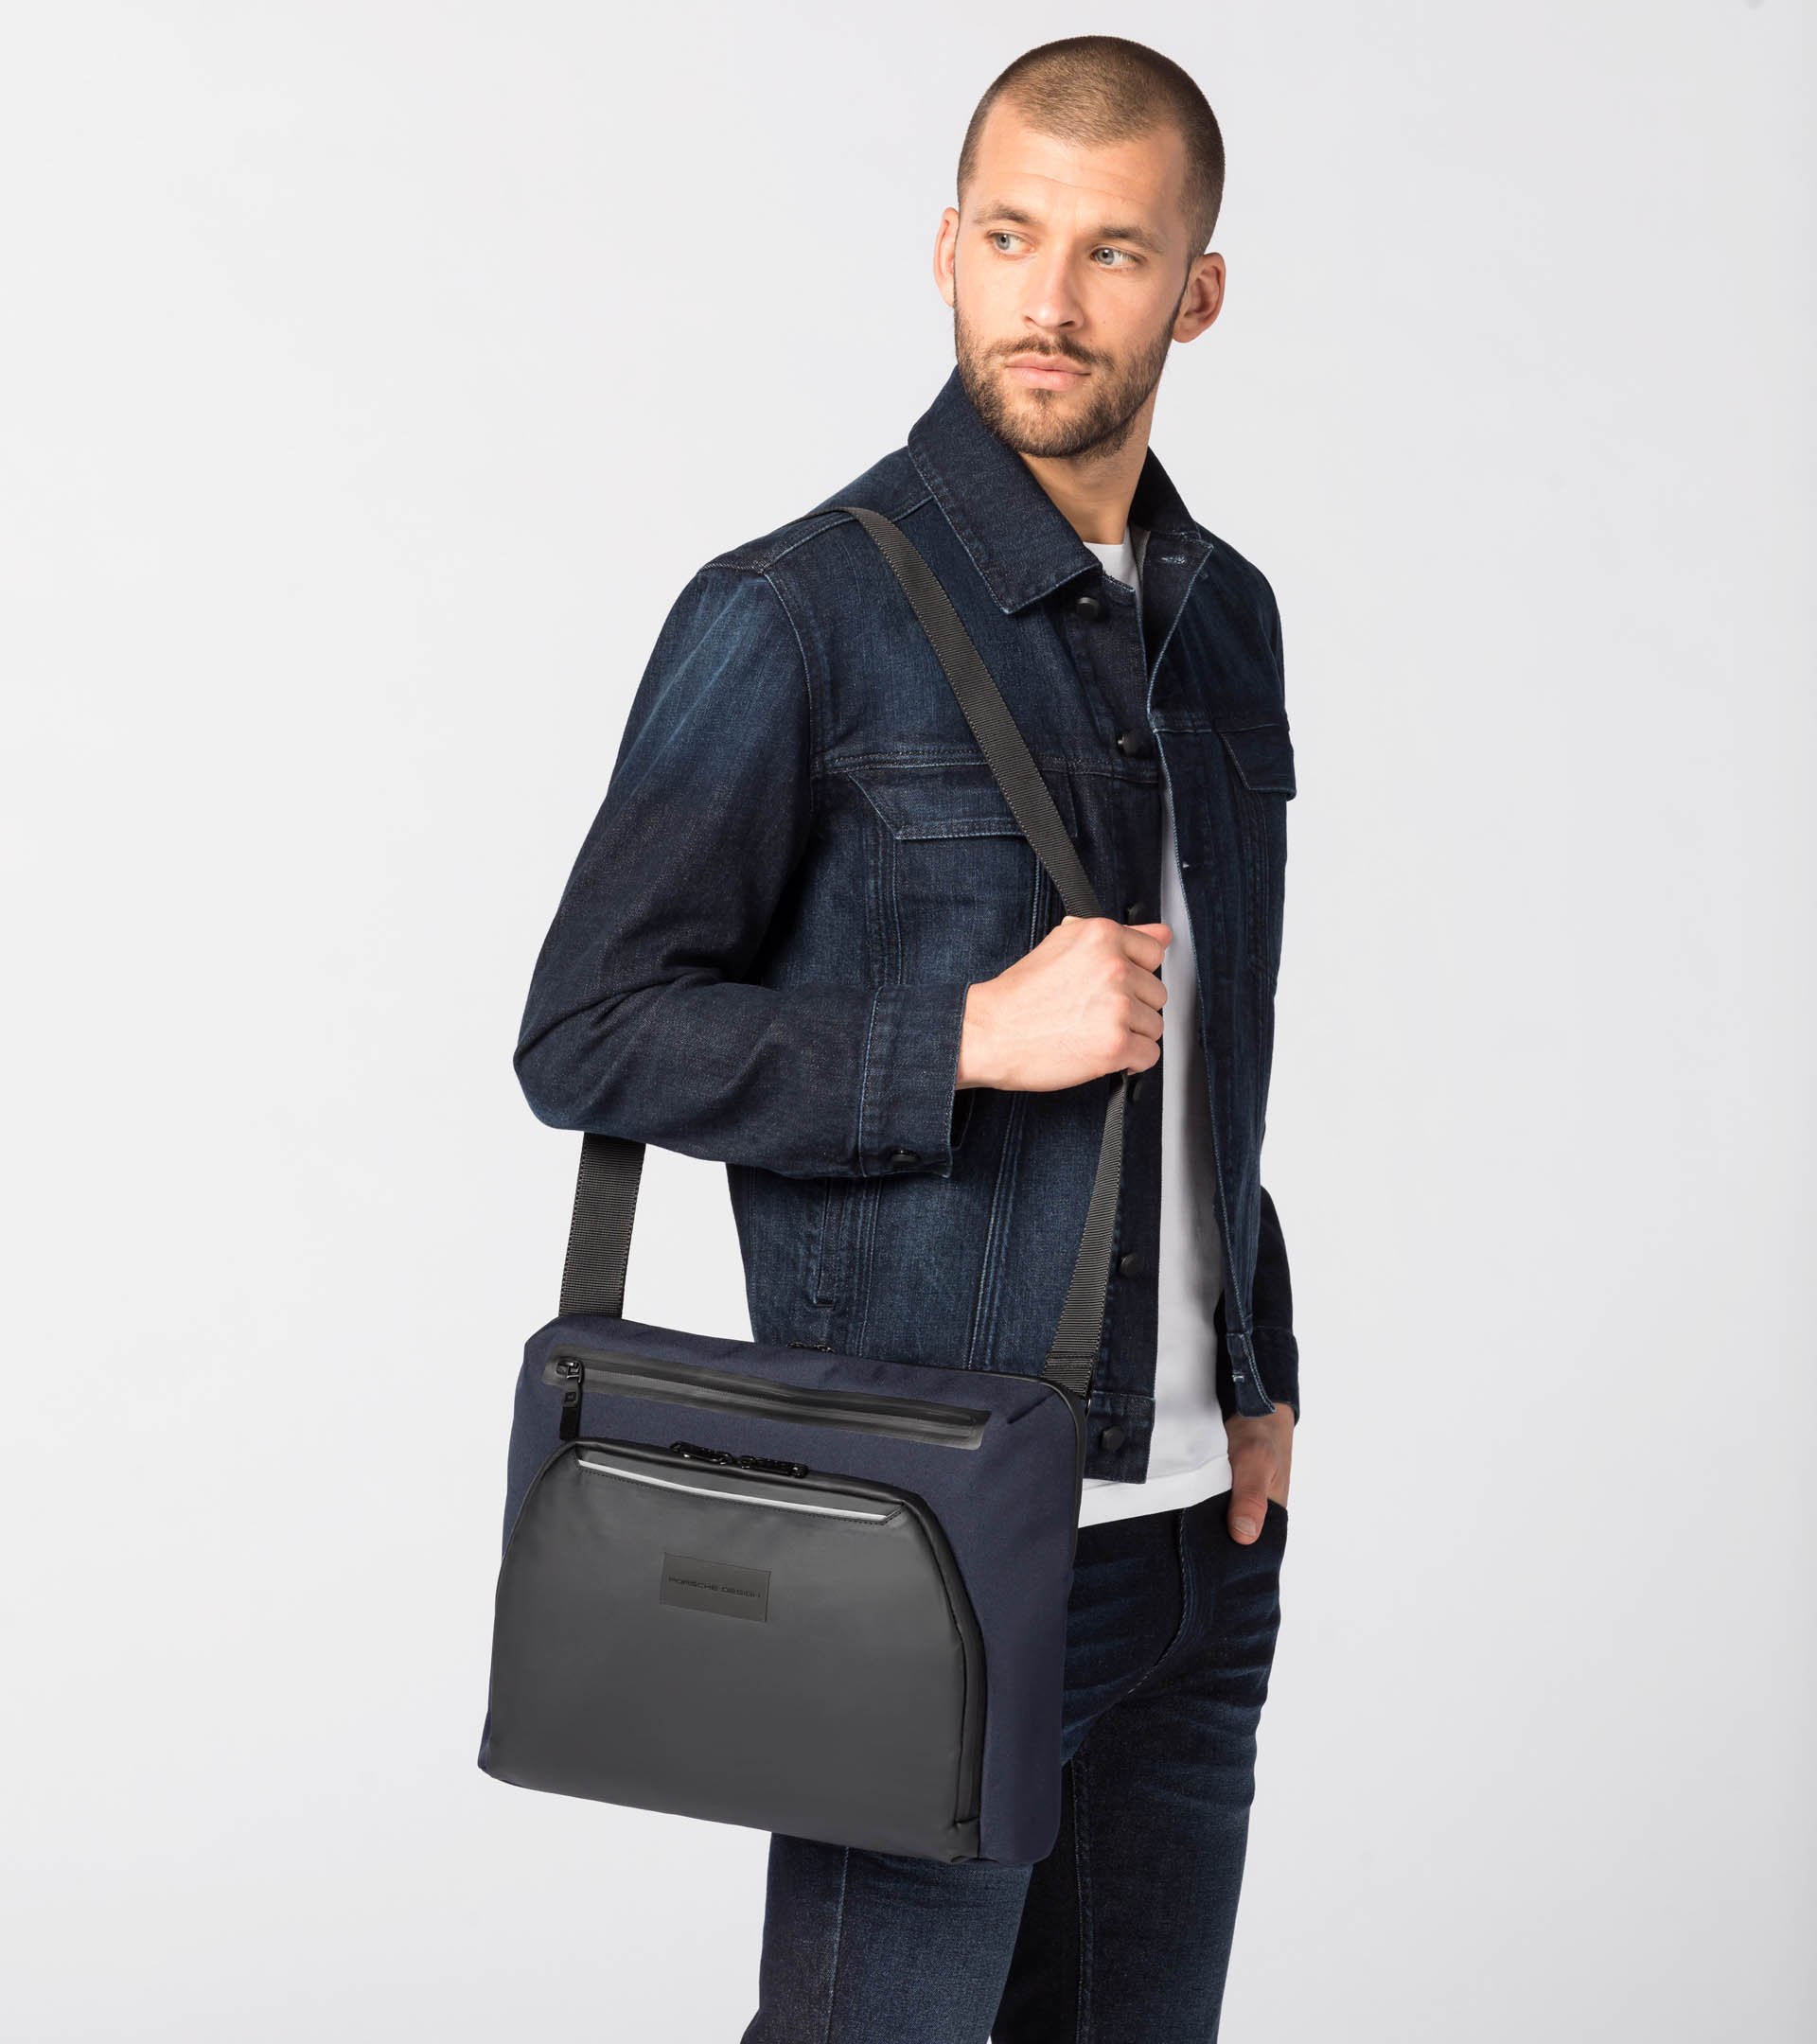 Urban Eco Messenger Bag - Luxury Business Bags for Men, Porsche Design